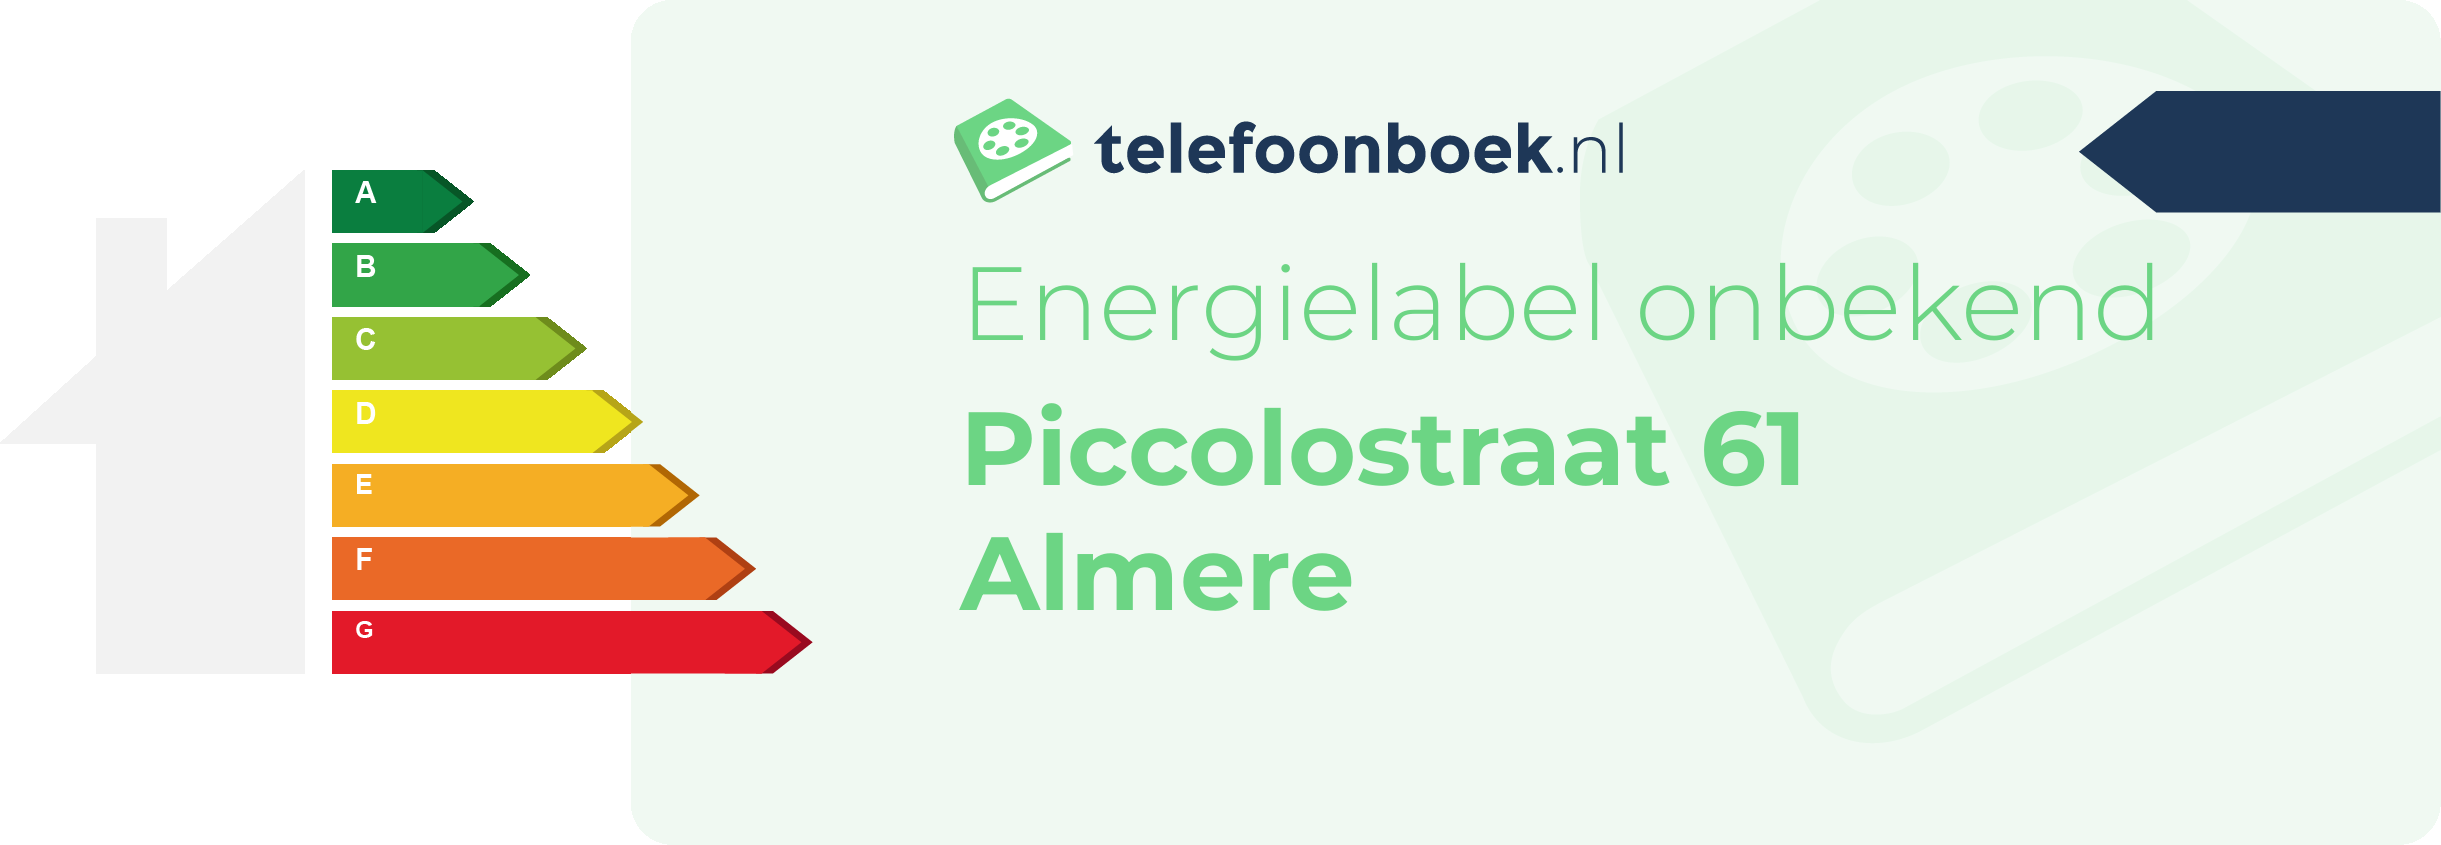 Energielabel Piccolostraat 61 Almere